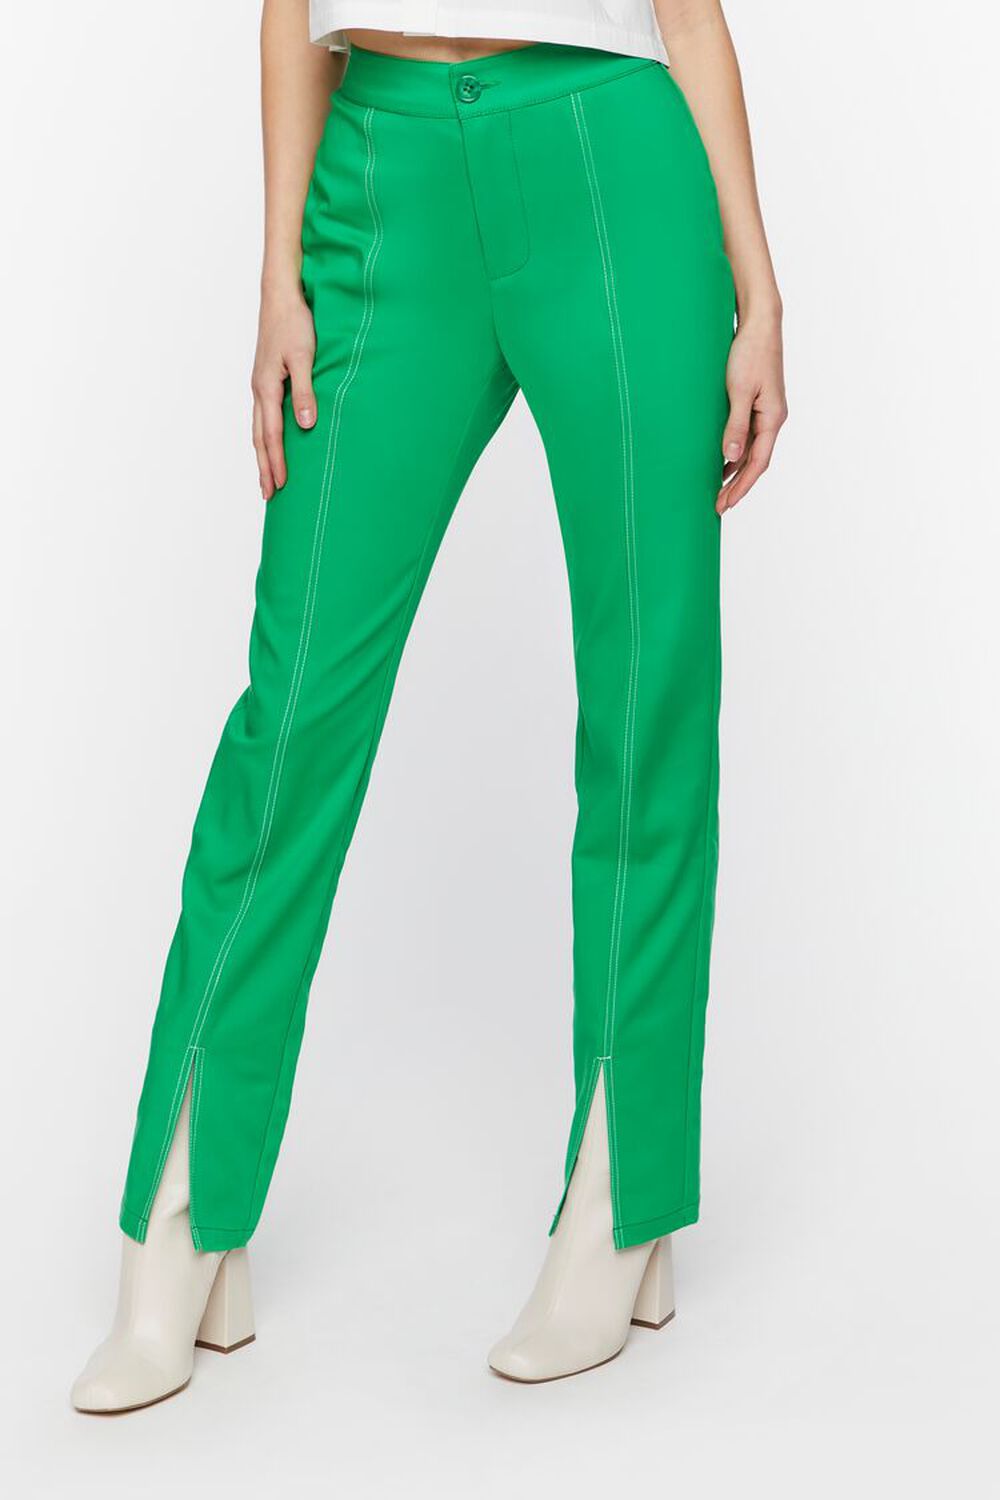 GREEN/WHITE Contrast-Trim Split-Hem Pants, image 2